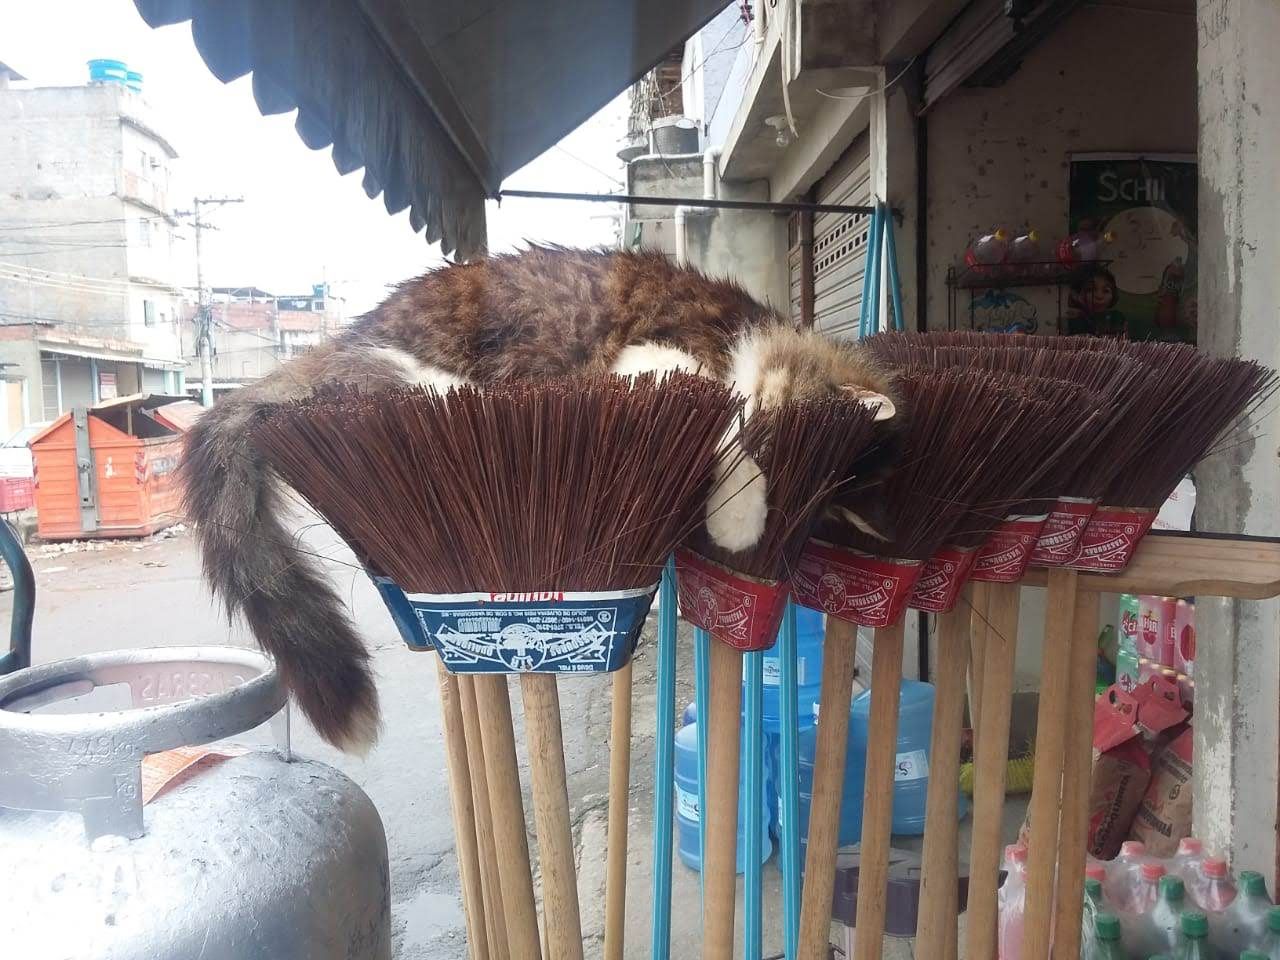 My girlfriend's cat sleeping on top of the brooms in her families shop